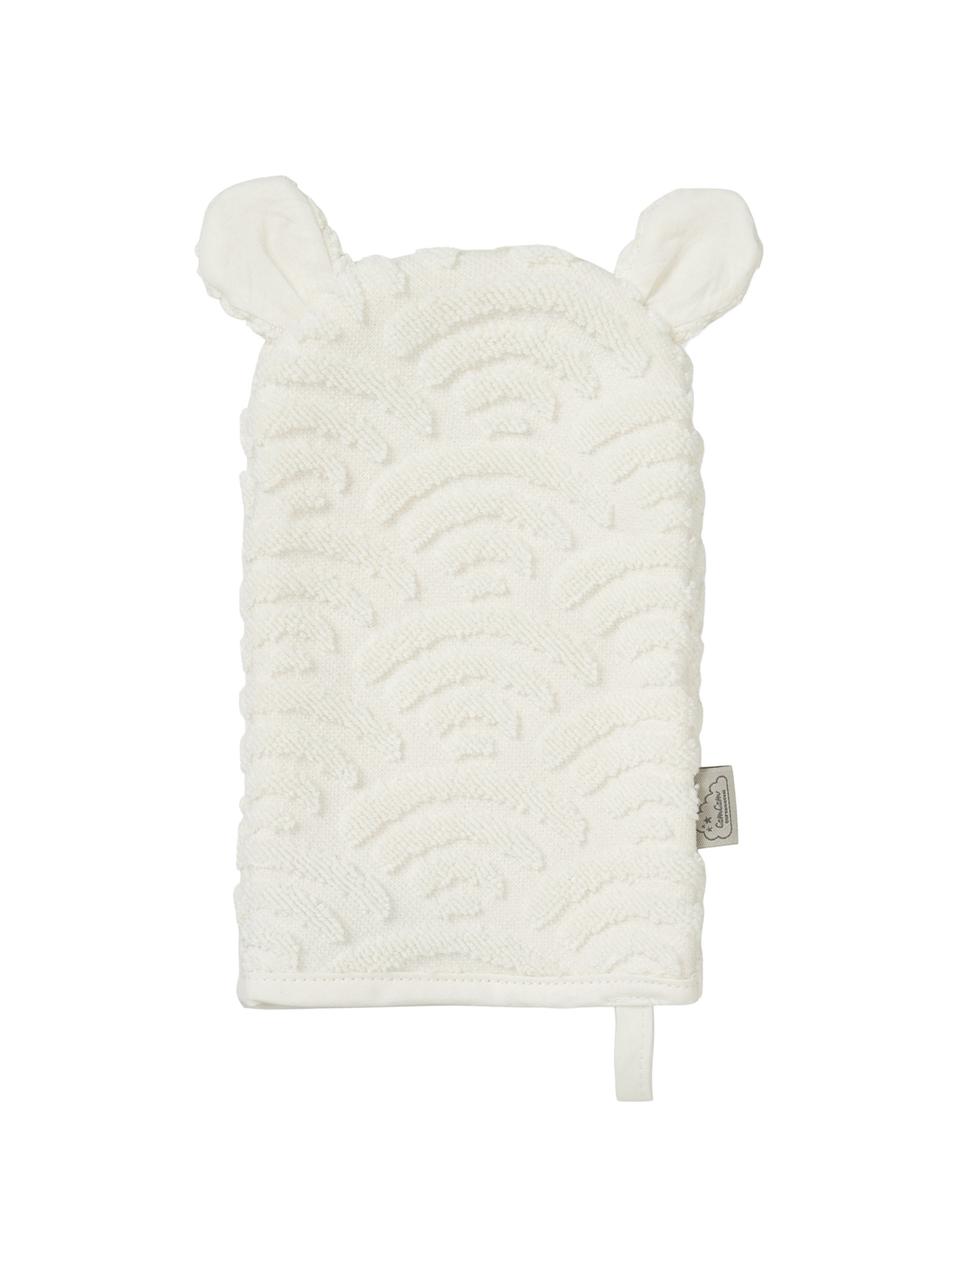 Manopla de baño Wave, 100% algodón ecológico, Blanco crudo, An 15 x L 22 cm